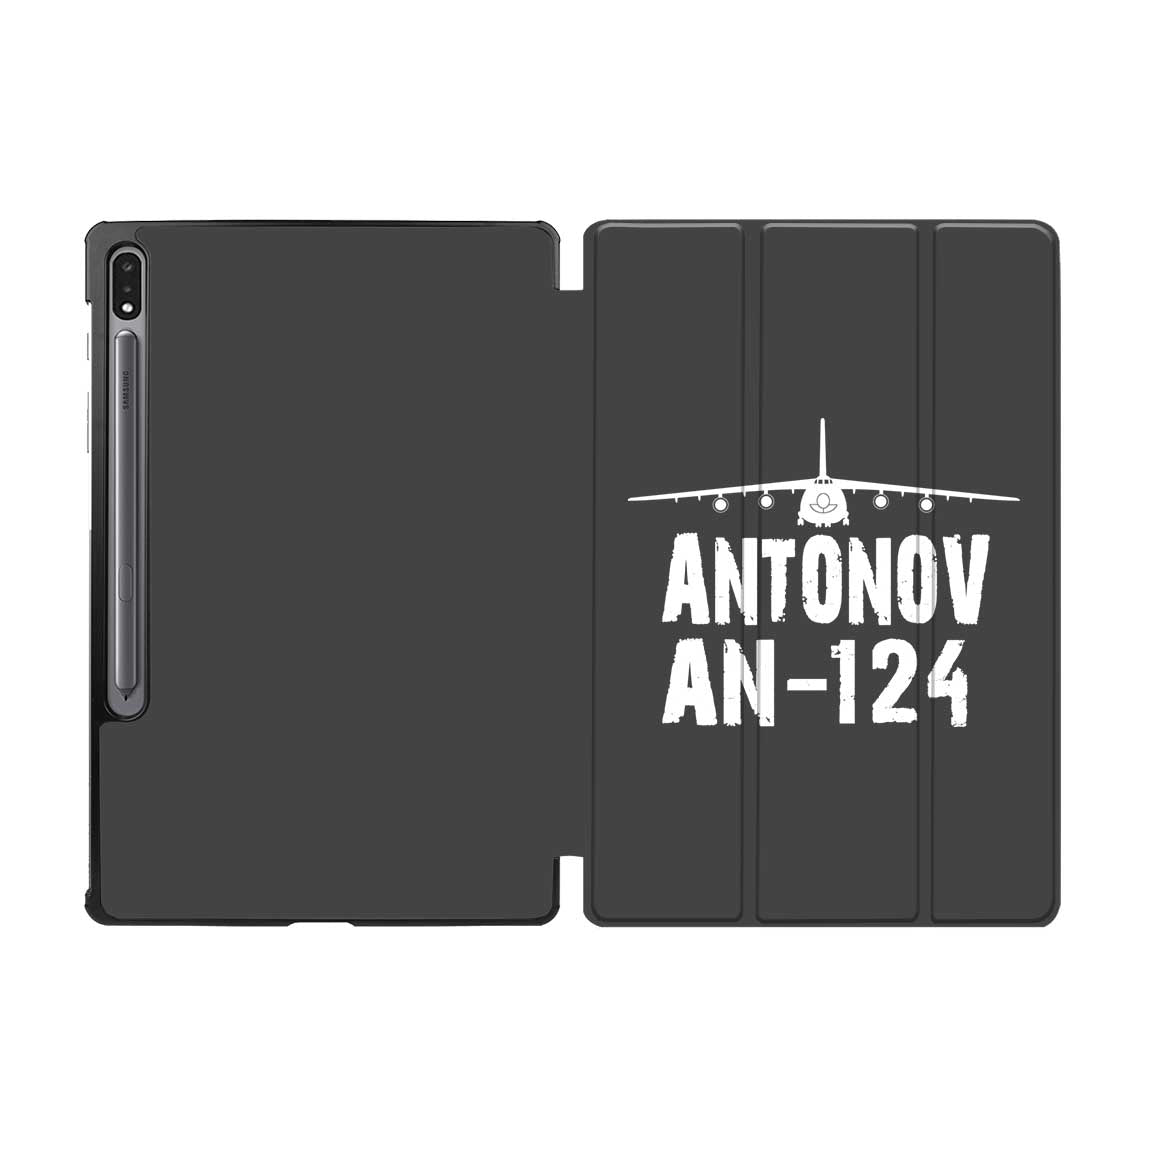 Antonov AN-124 & Plane Designed Samsung Tablet Cases